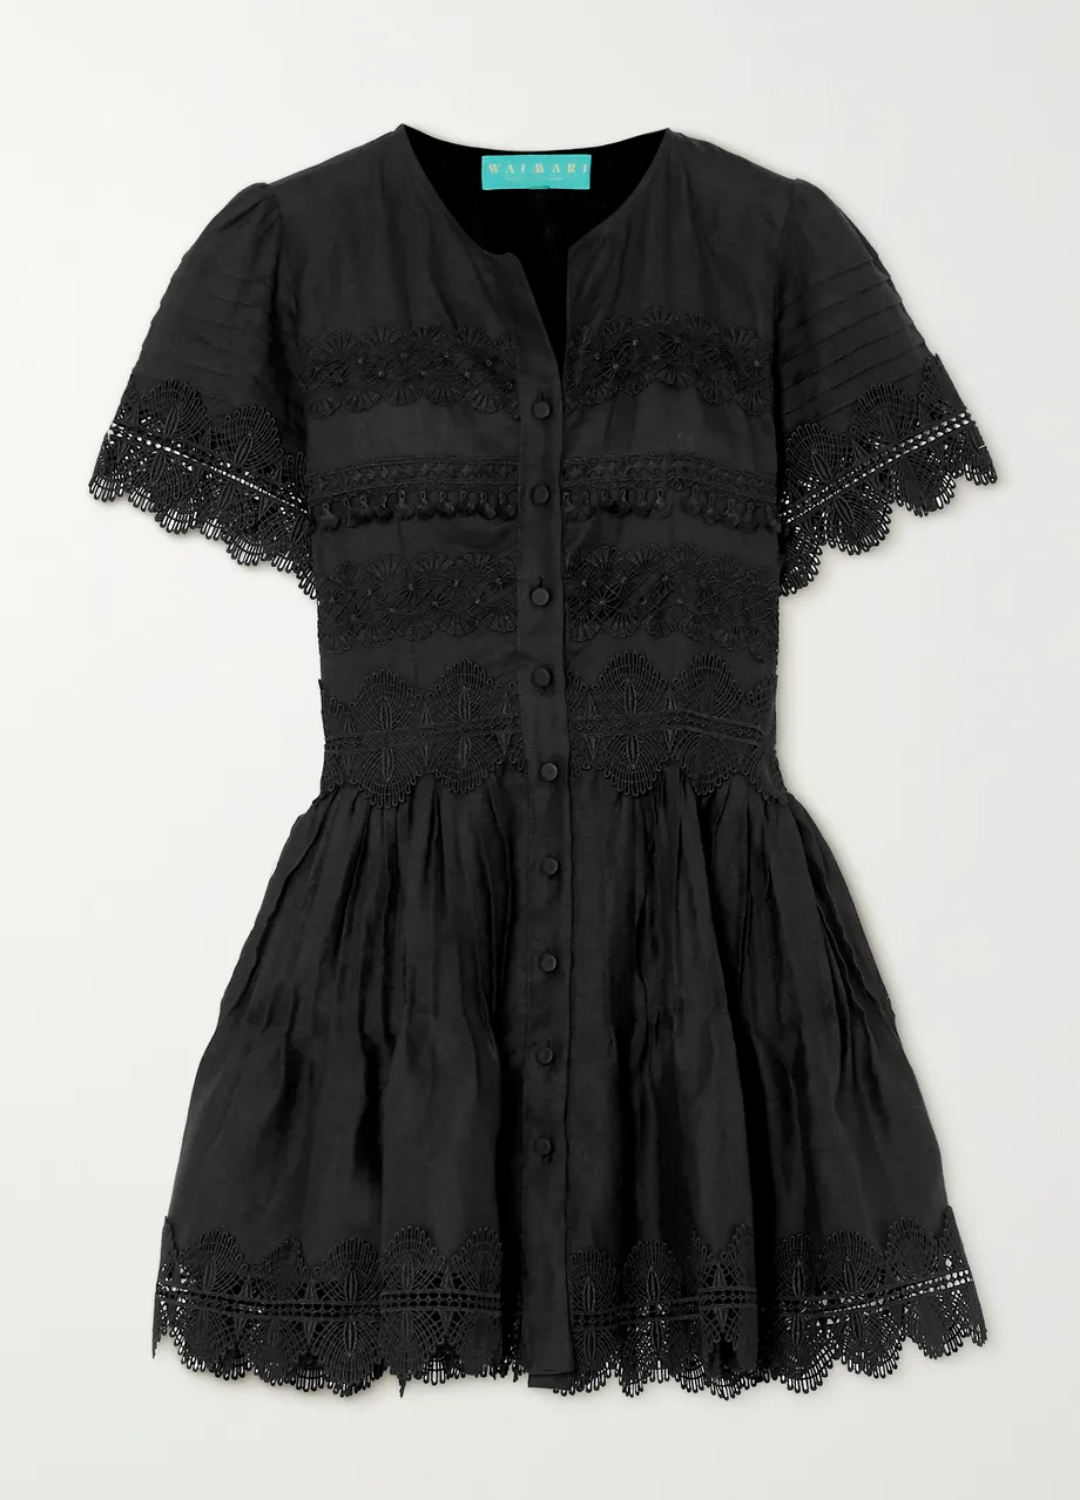 waimari-violetta-dress-black